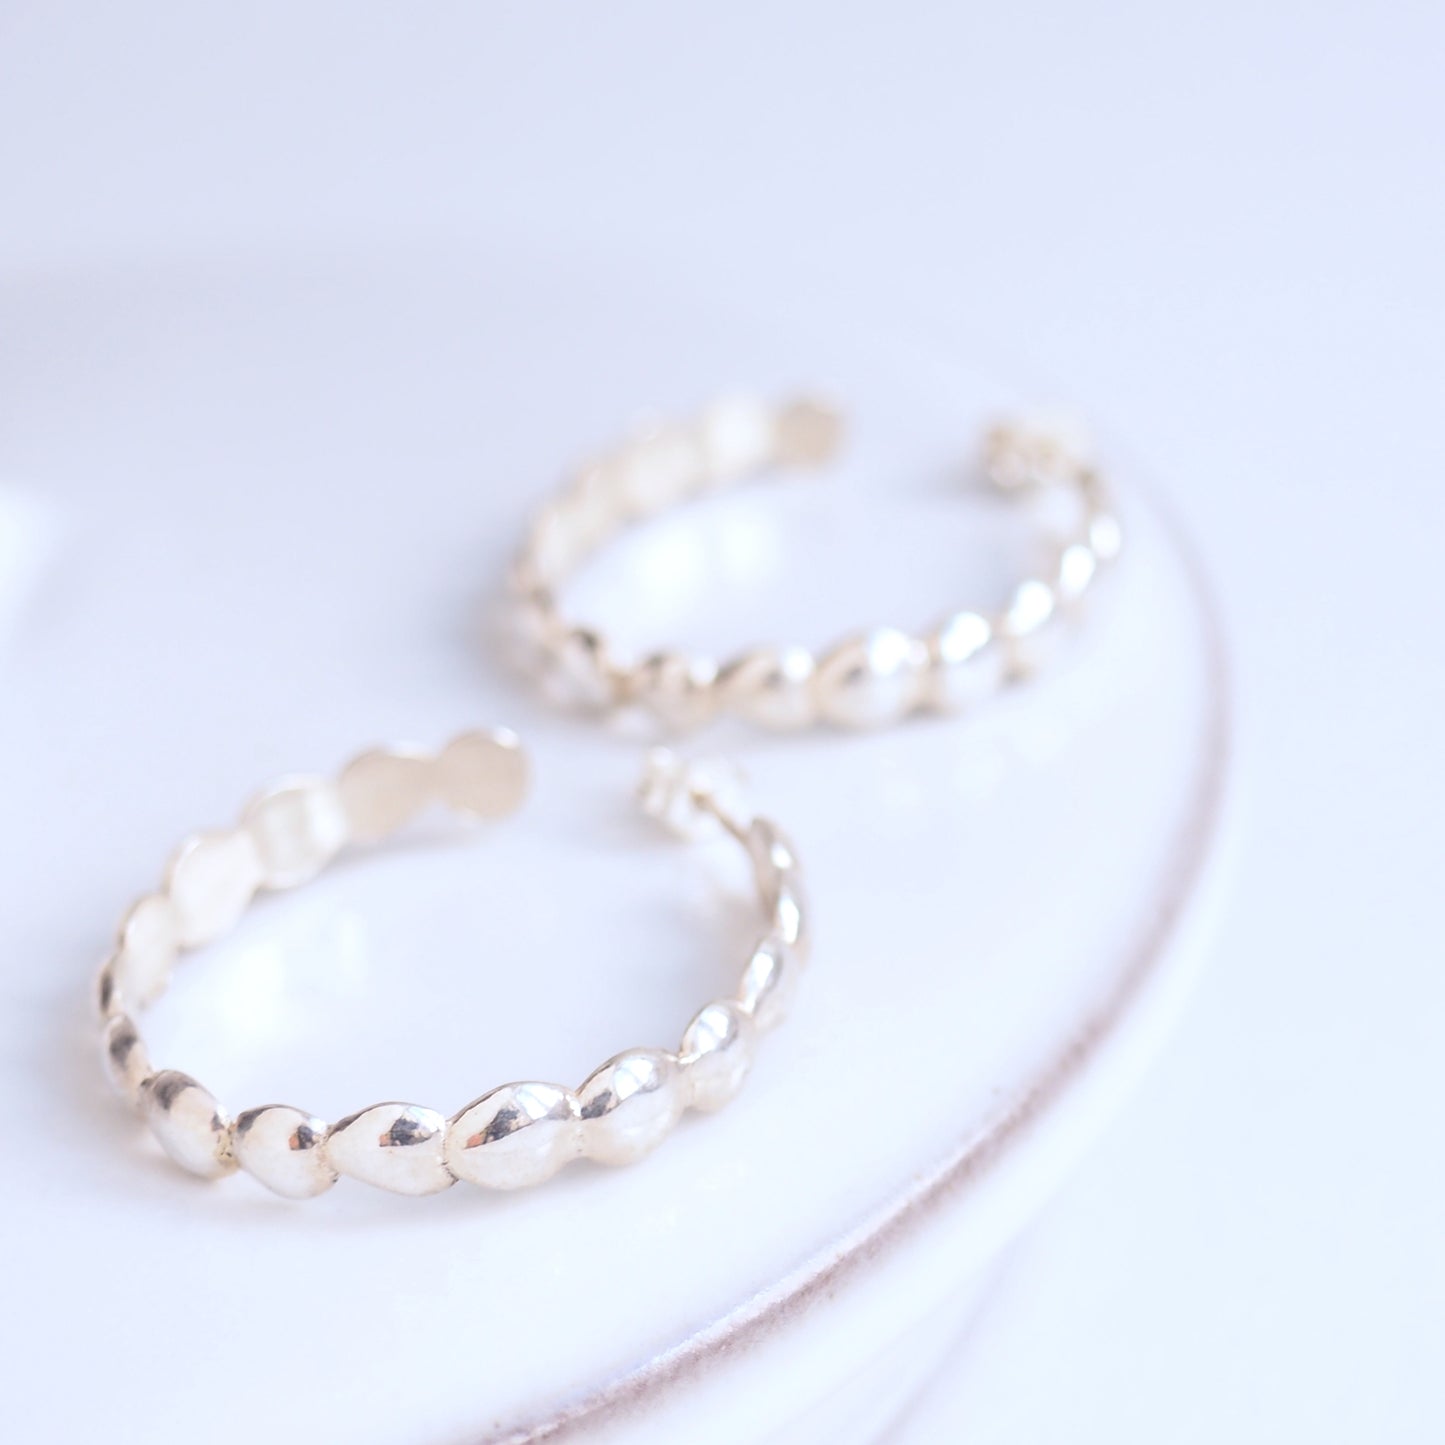 earrings Silver Jewelry handcrafted handmade fashion bespoke custom design